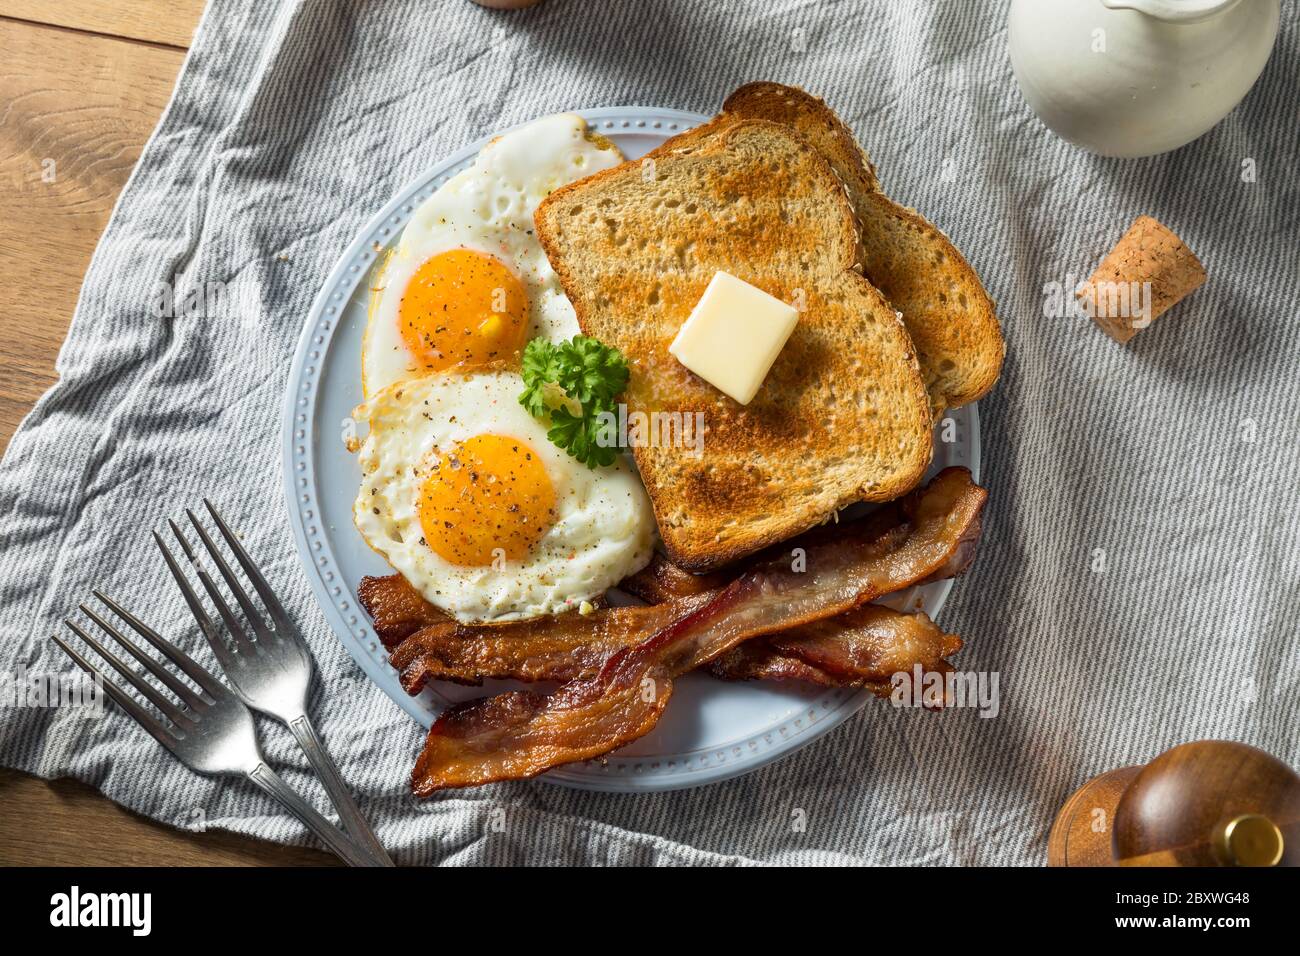 breakfast, eggs sunny side up, soup - Stock Illustration [79715898] - PIXTA